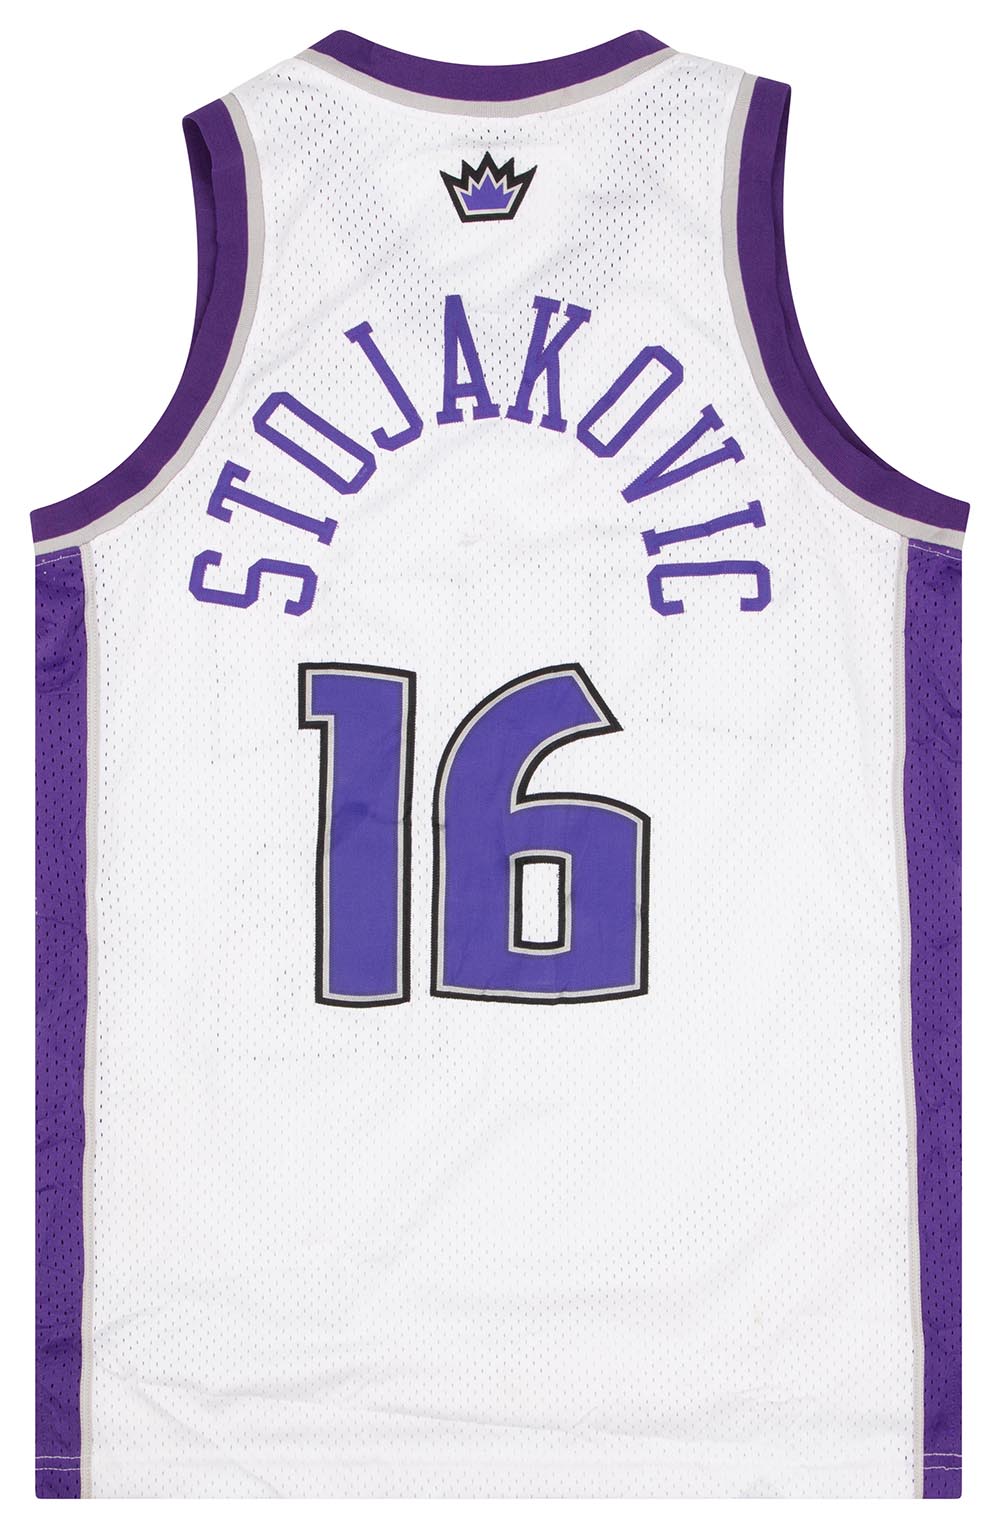 Sacramento Kings will retire Peja Stojakovic's jersey